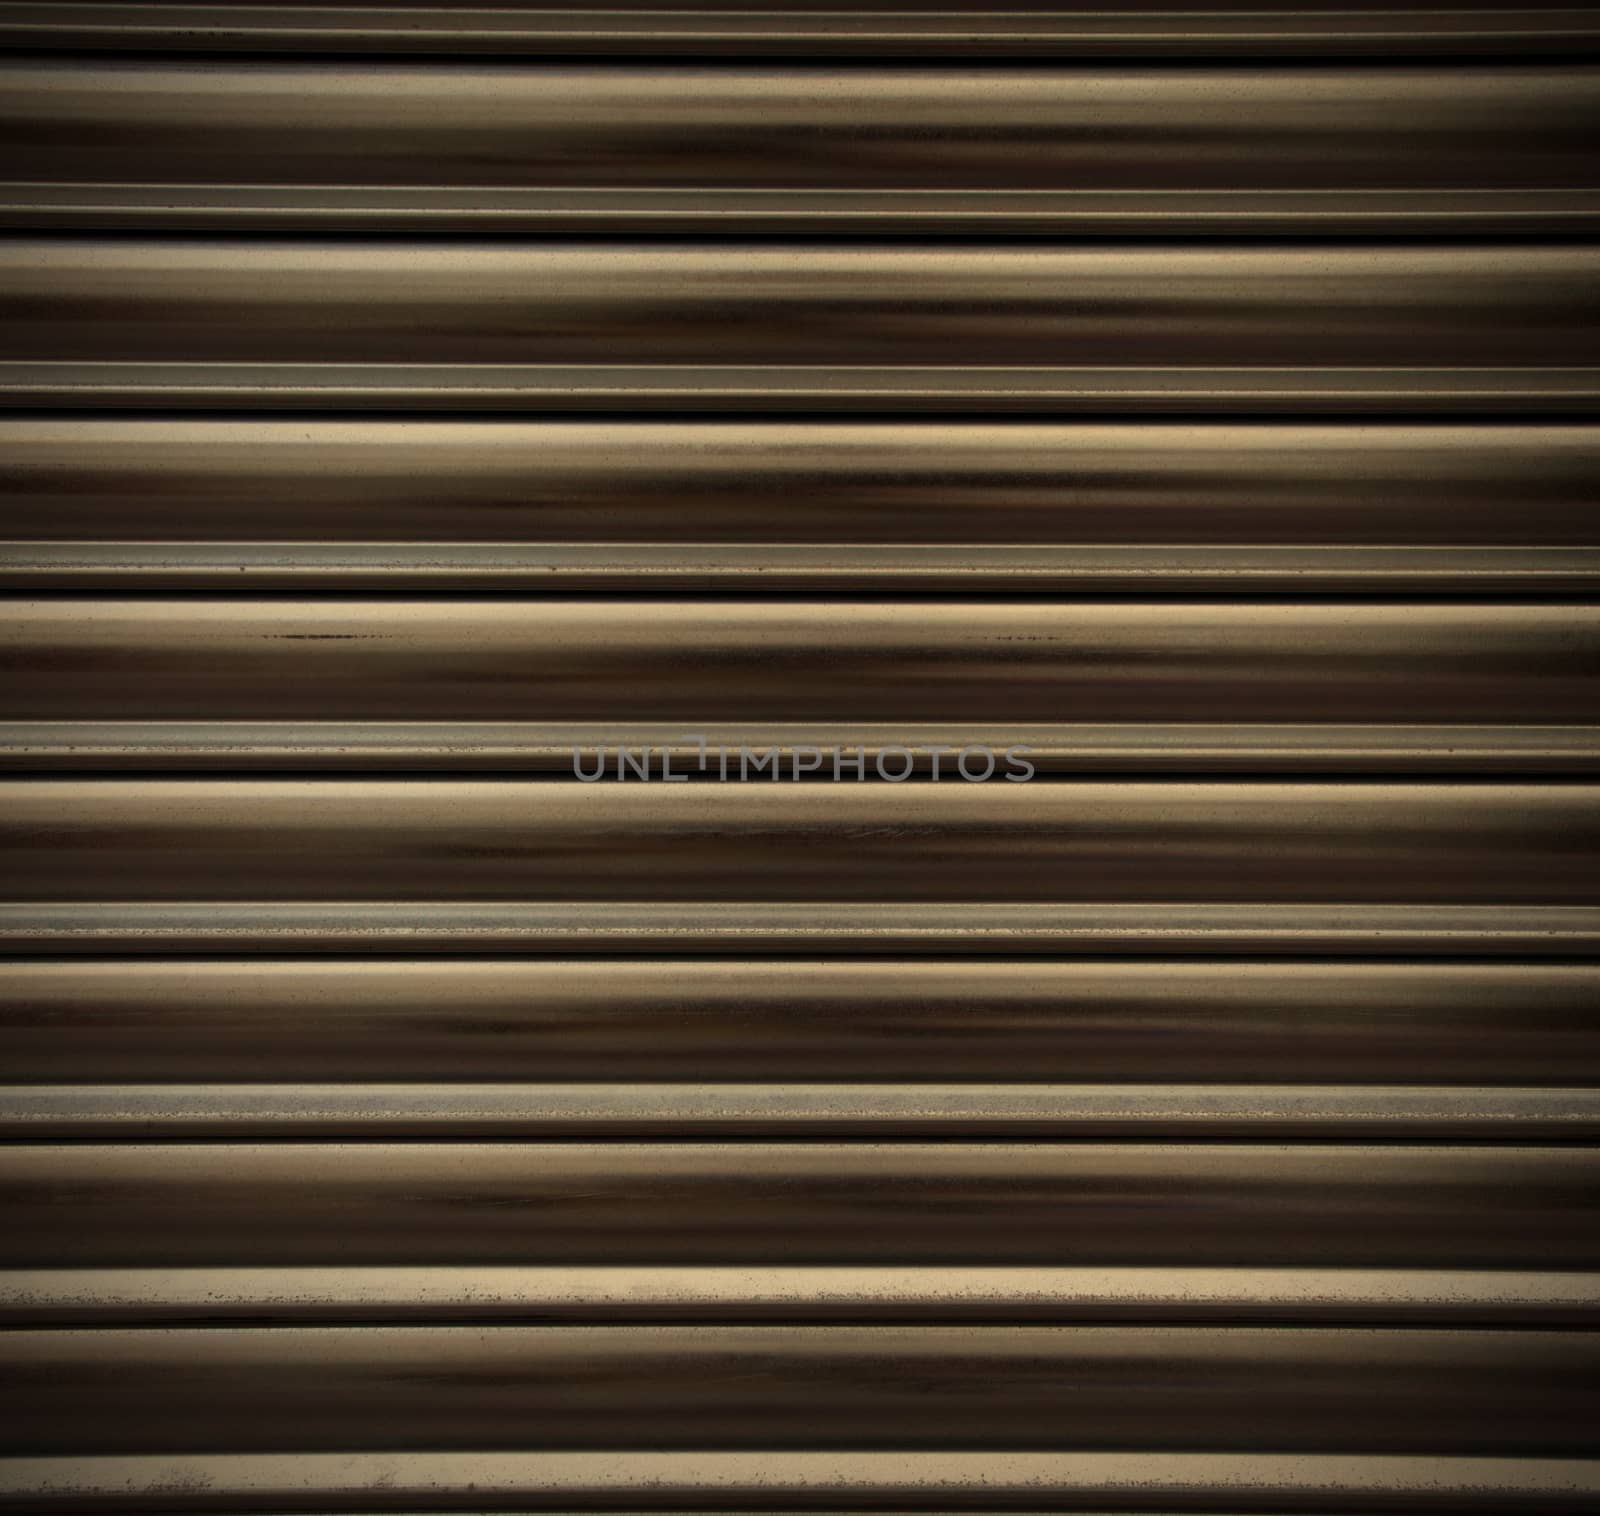 corrugated metal background, instagram image style